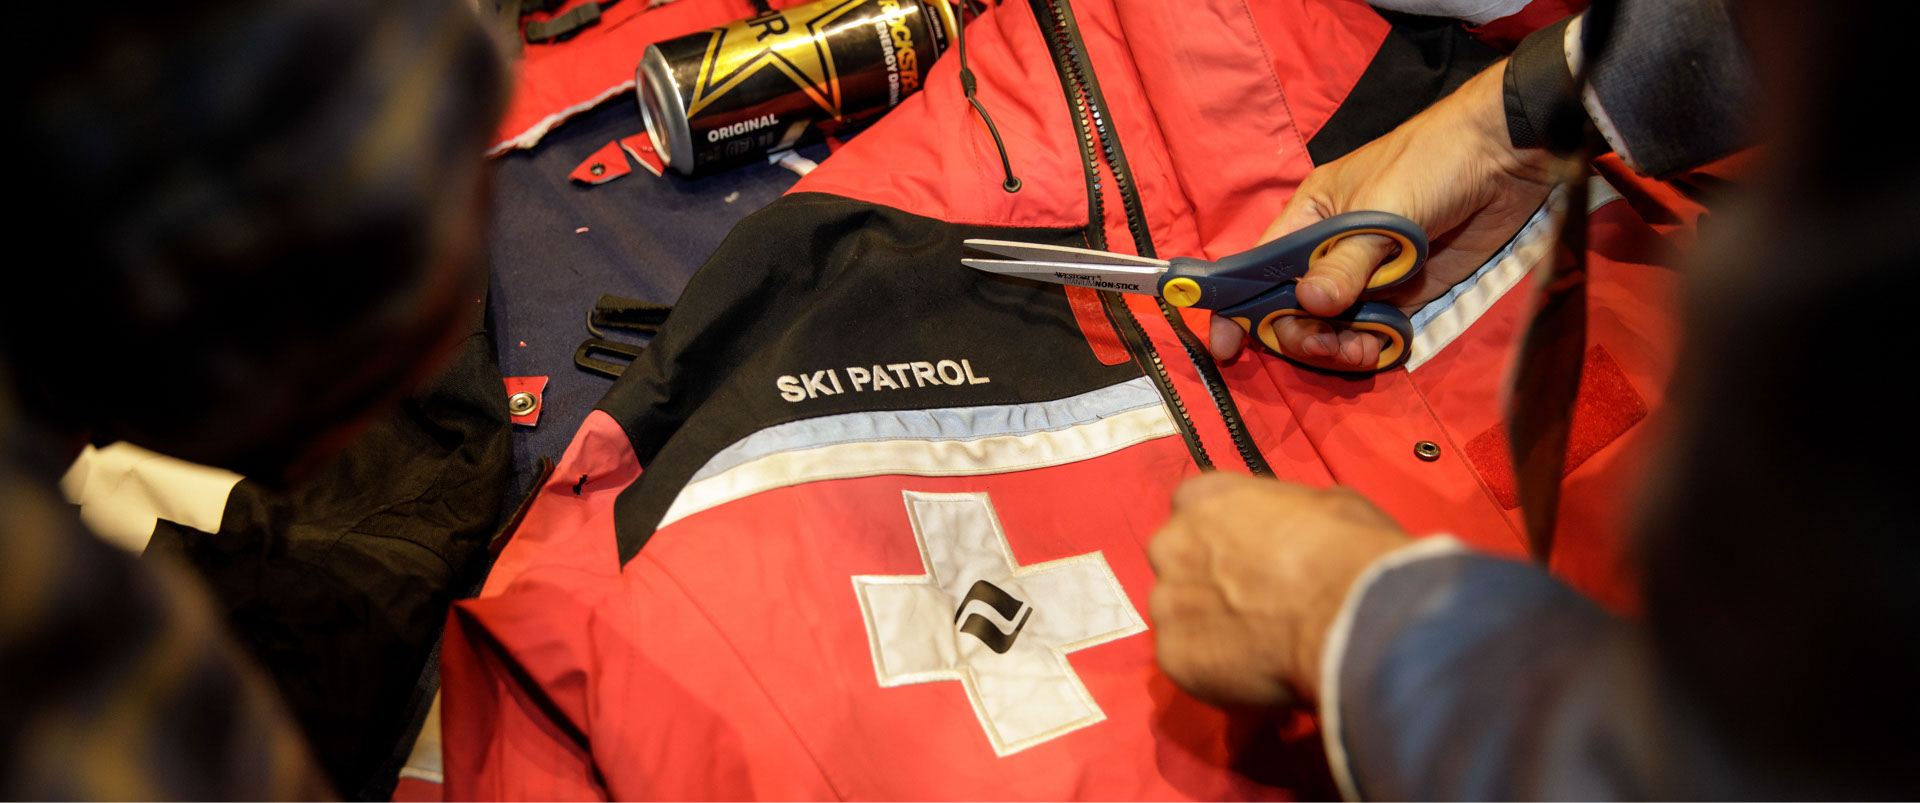 Hand holding scissors over an old ski patrol jacket